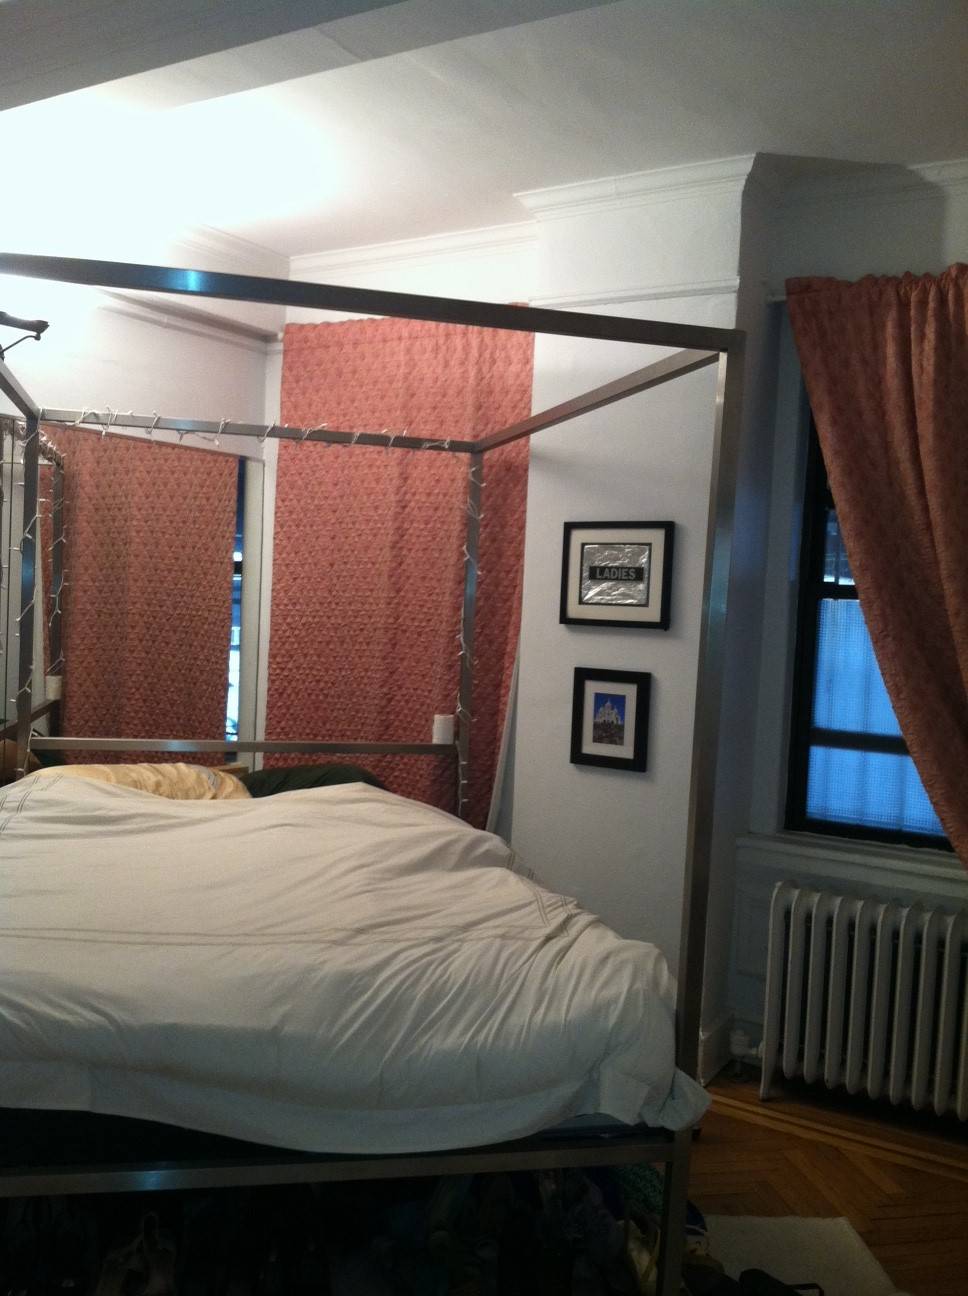 The Perfect Share for Columbia Students - UWS 4 bedroom Condo  $5275 - Elegant Doorman Elevatory Bldg